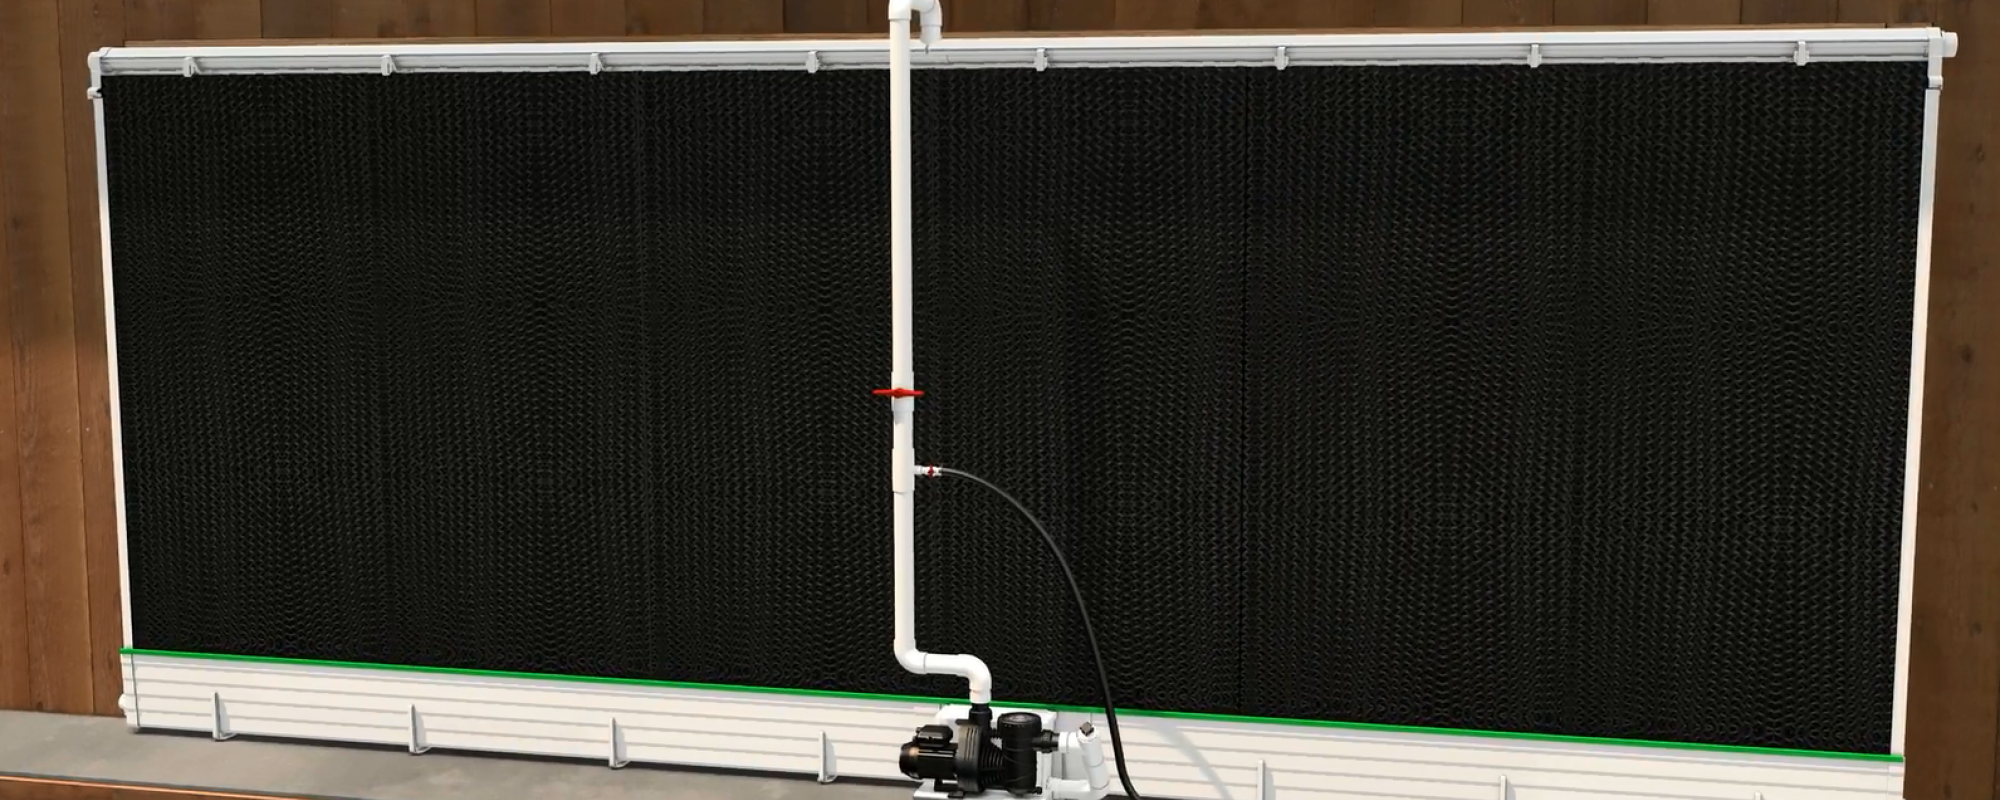 Intelligent Greenline Pad Cooling prevents heat stress